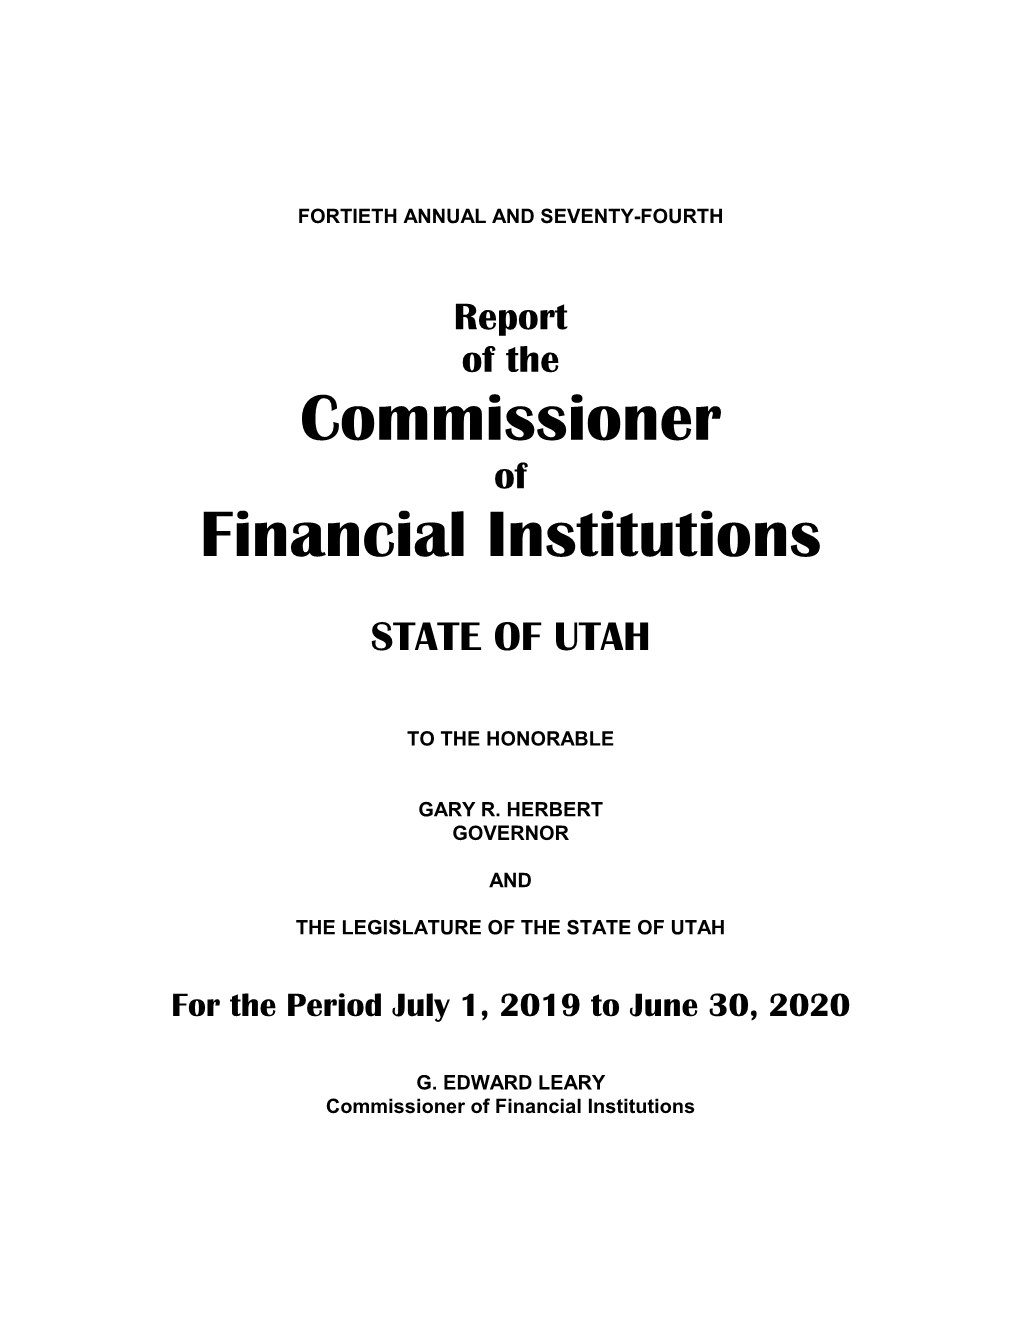 UDFI Annual Report-2020